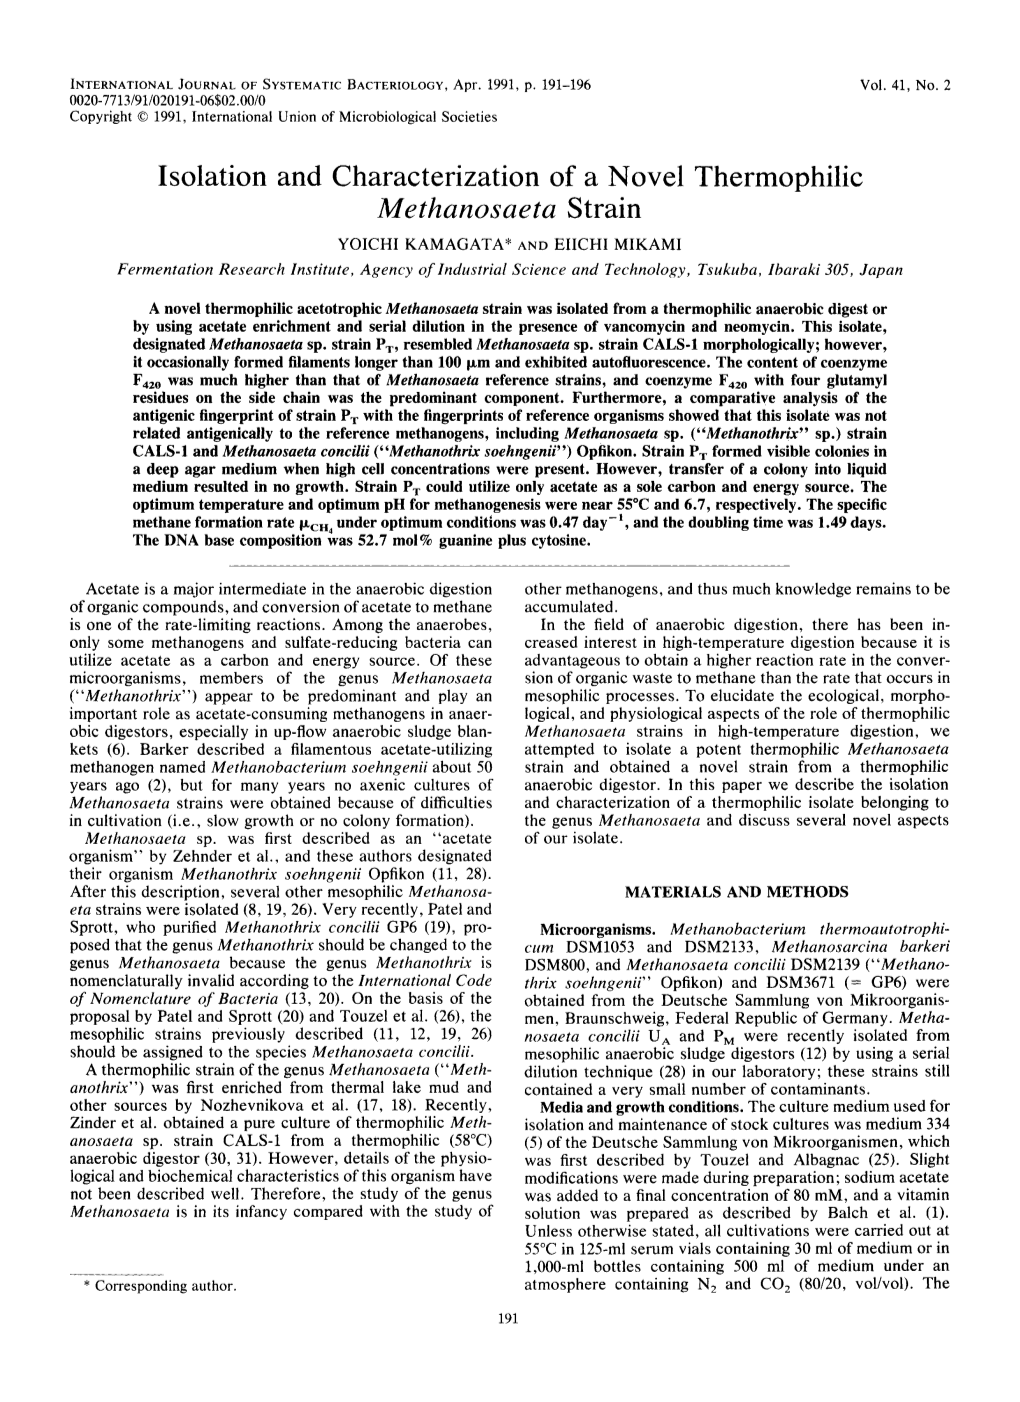 Isolation and Characterization of a Novel Thermophilic Methanosaeta